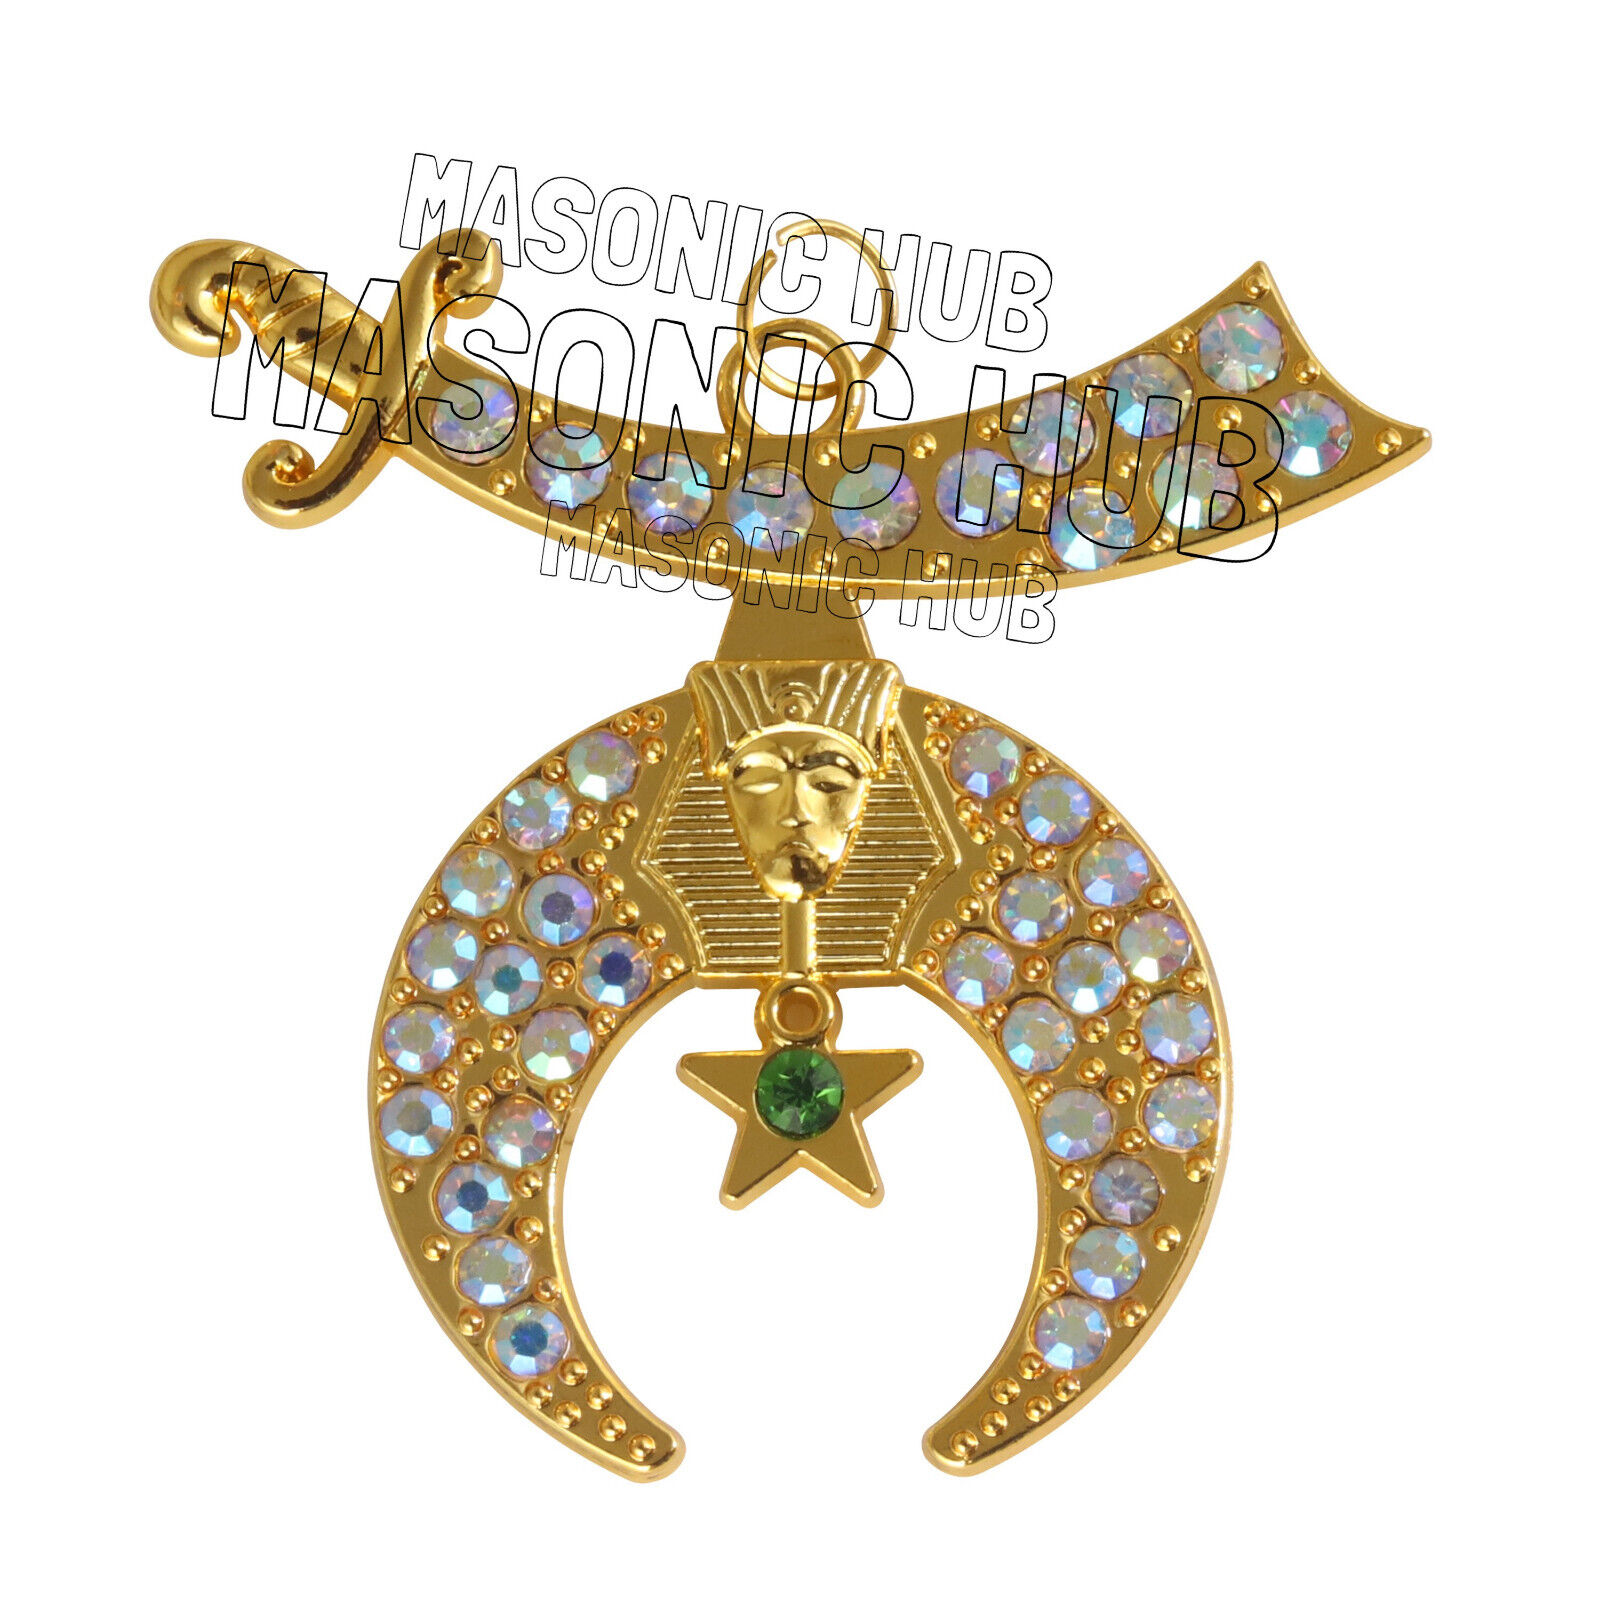 Masonic Regalia Rhinestones Shriner Jewels - Gold Plated with Rhinestones